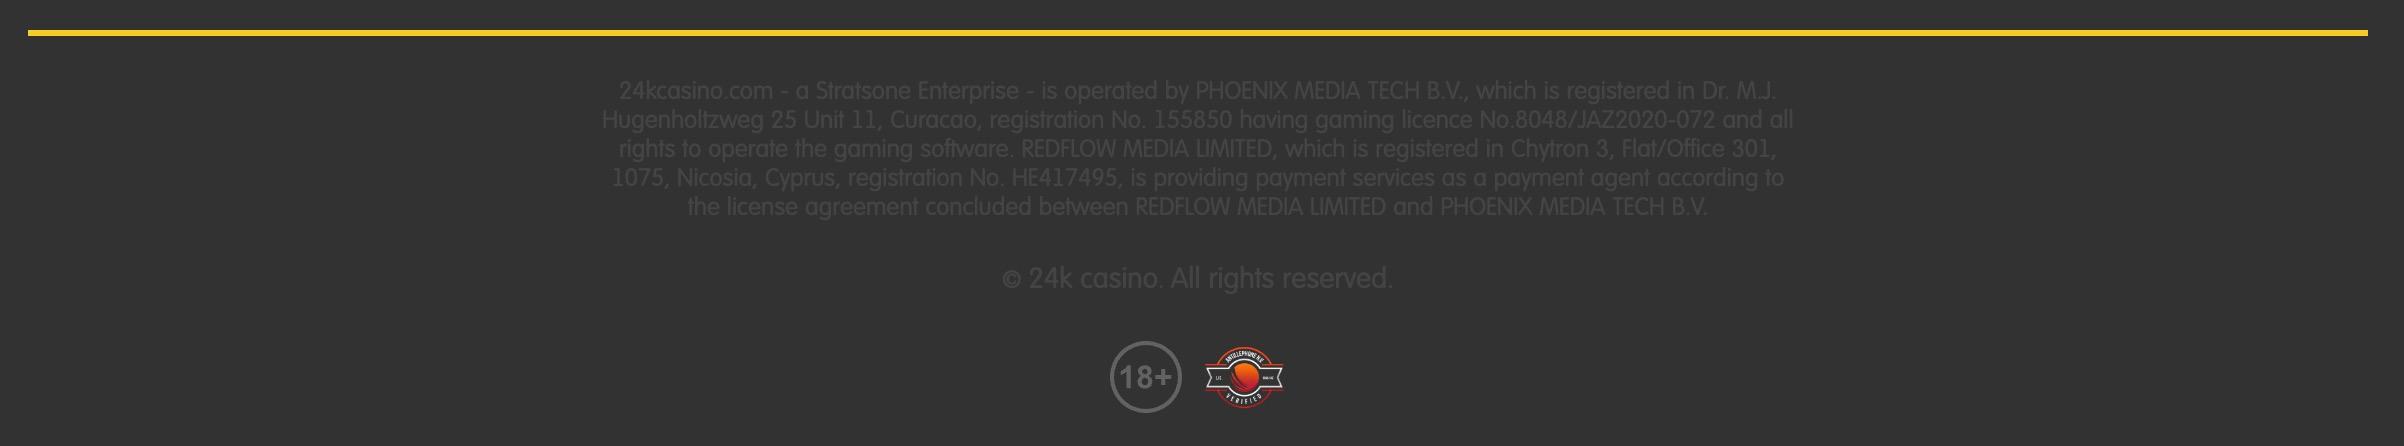 24k casino licence